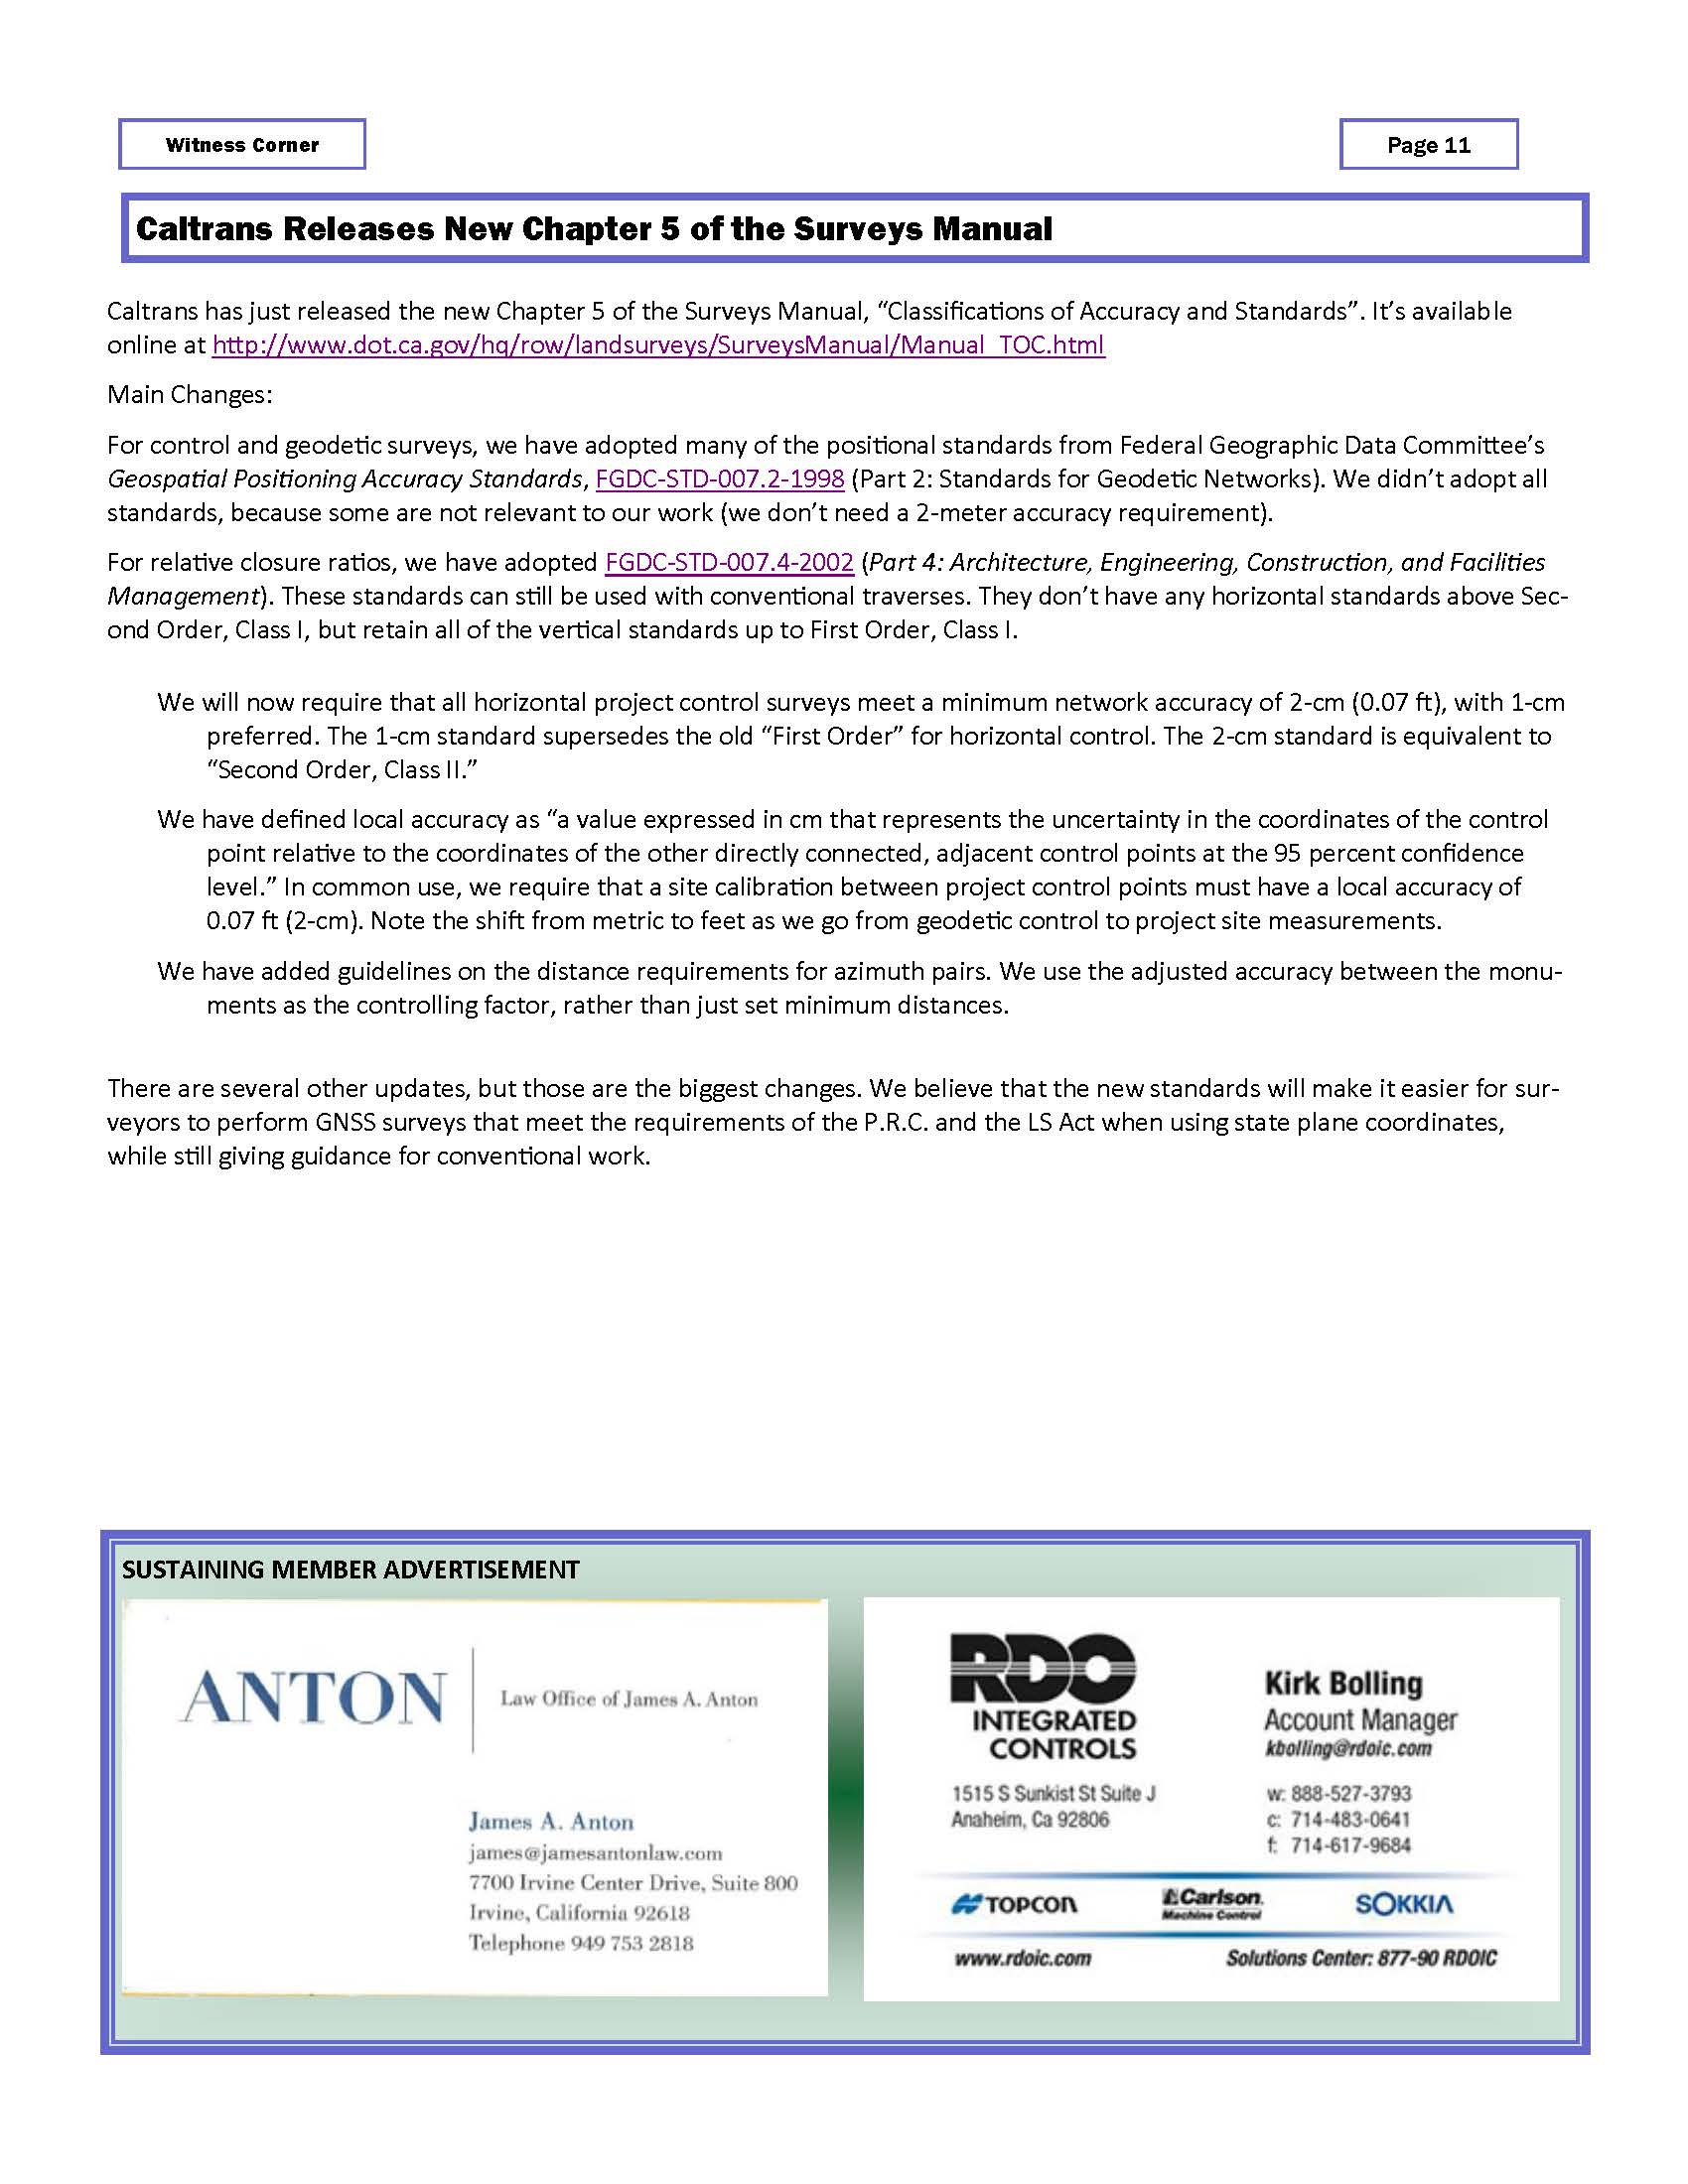 OC-CLSA 082015 Newsletter_Page_13.jpg